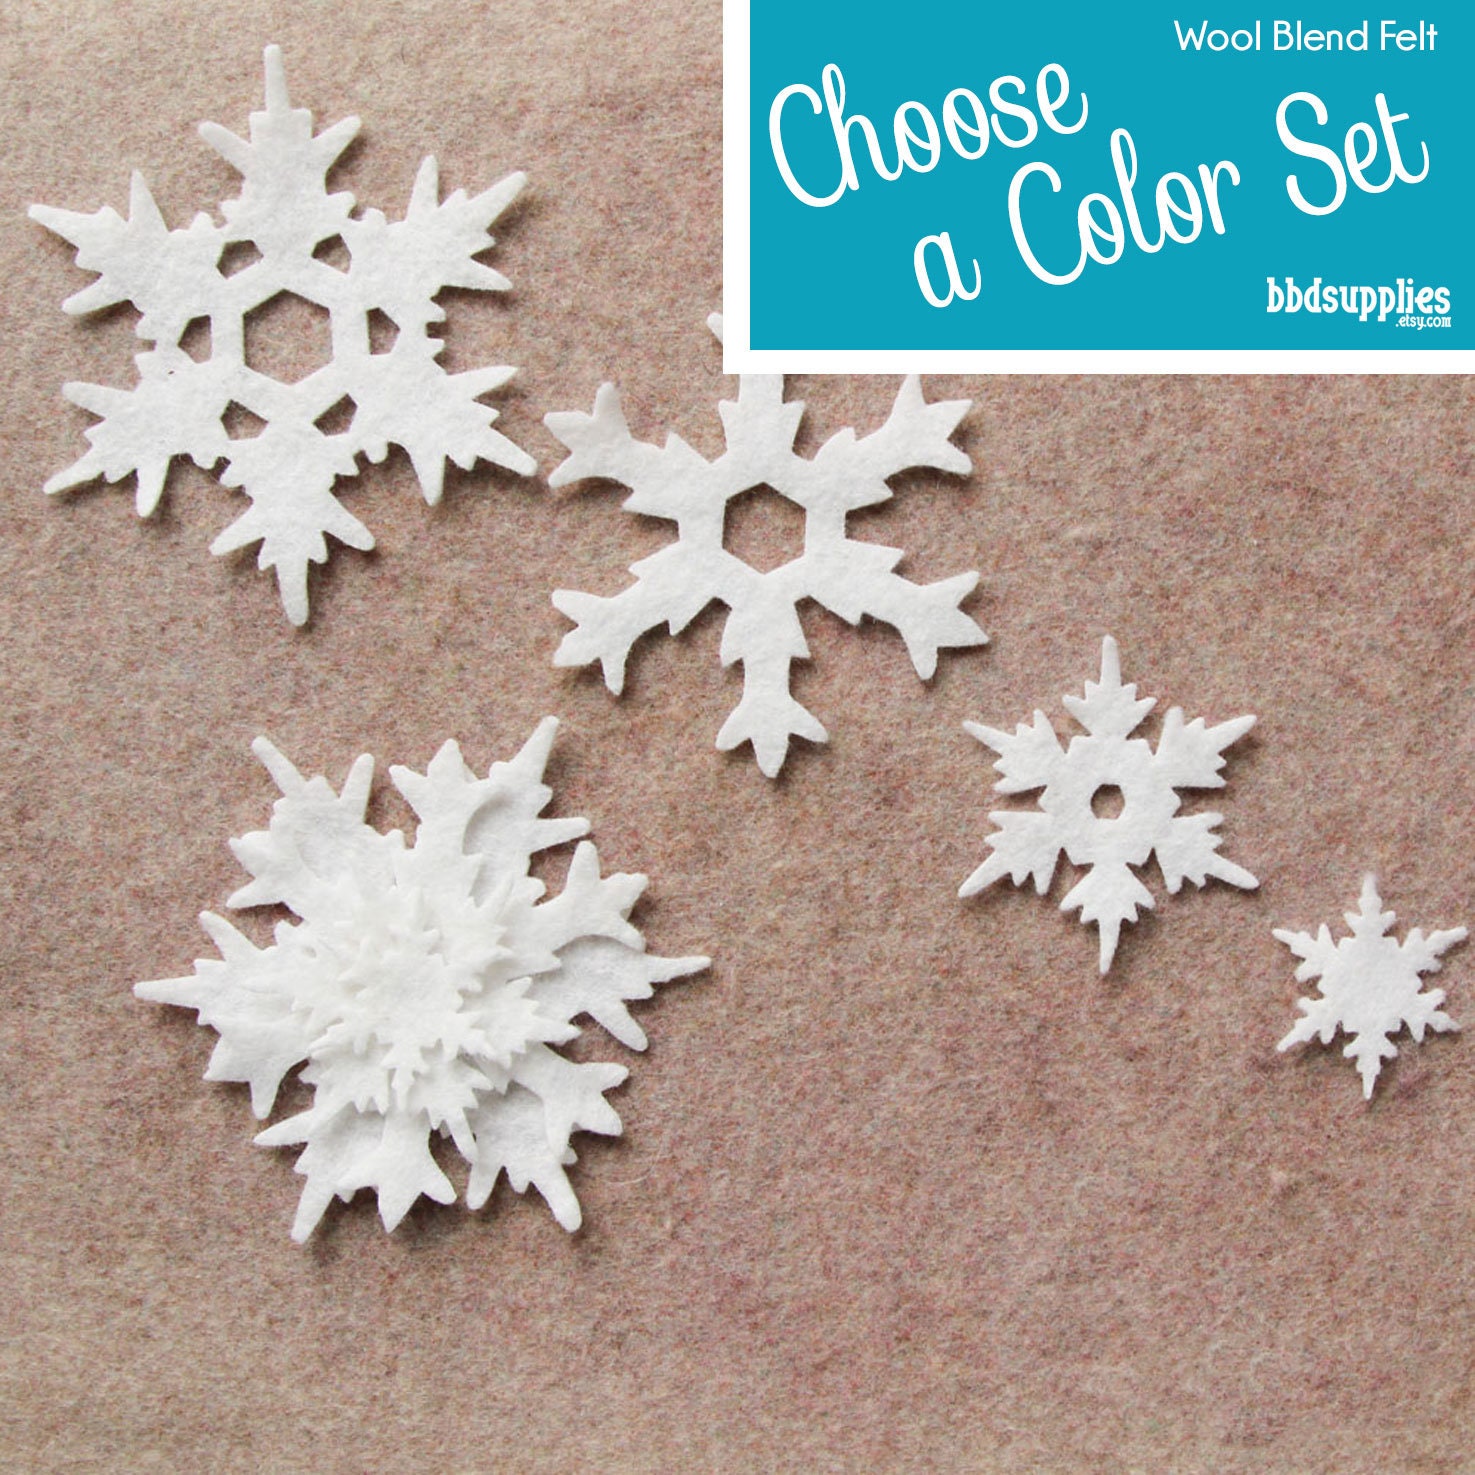 Wool Blend Felt Shapes | 12 Snowflakes Style 7 Pick A Color Set Diy 48 Unassembled